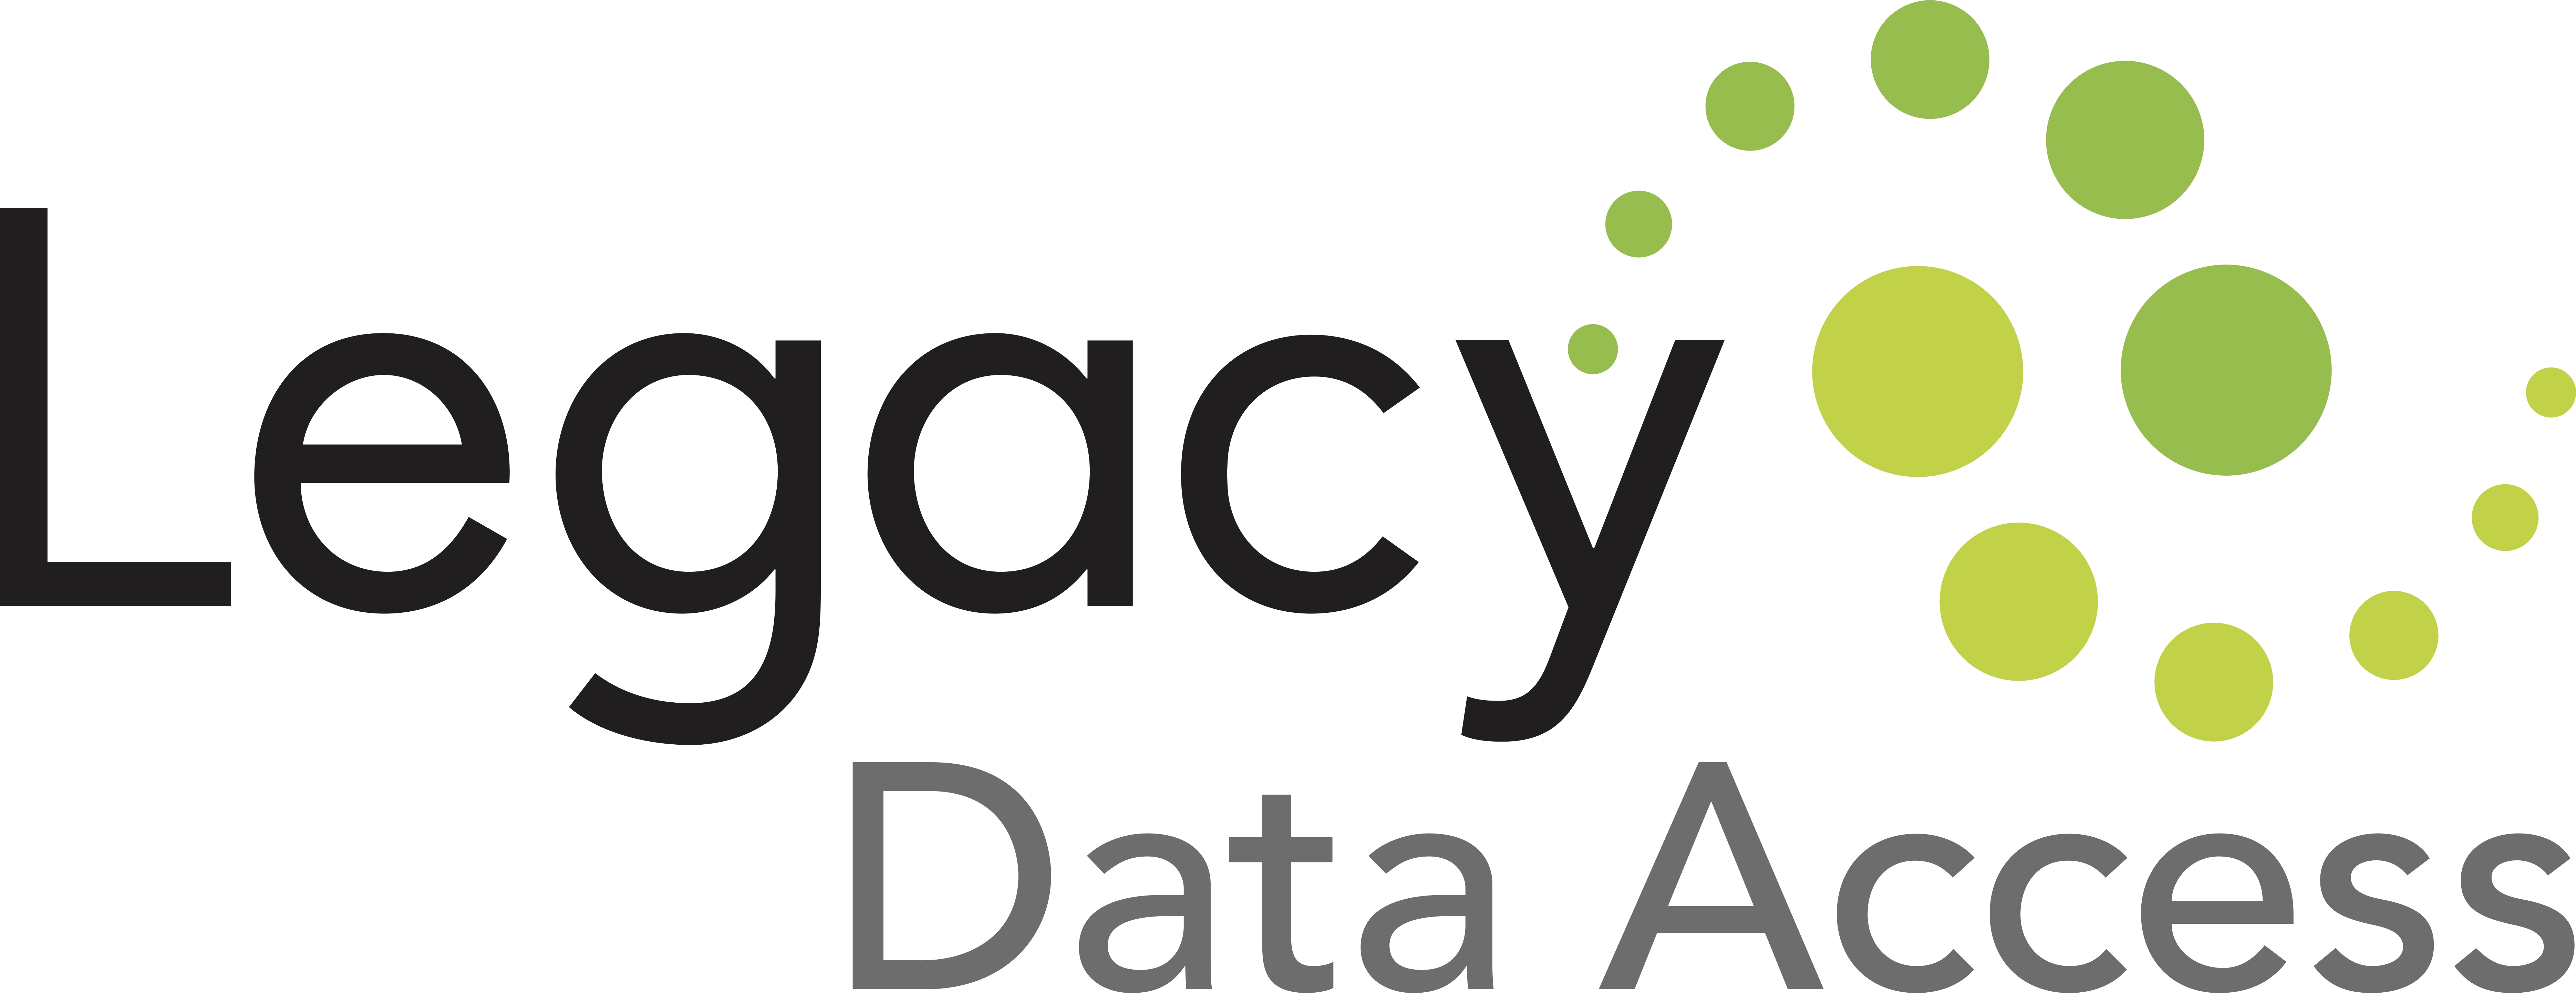 Legacy Data Access 